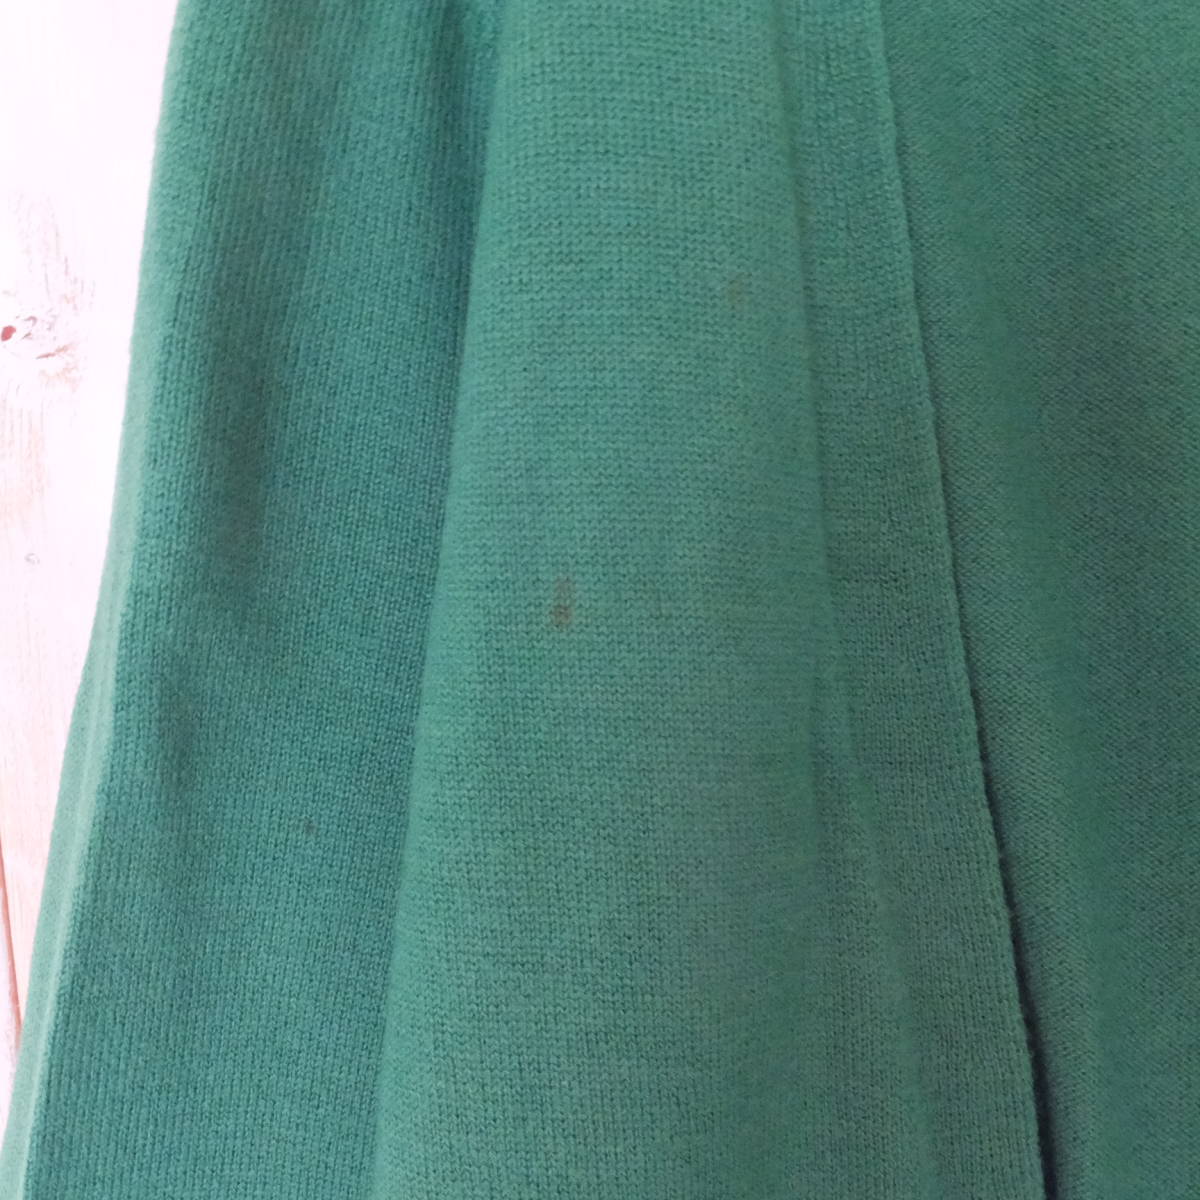 【Marani marani】意大利製造的綠色半長羊毛開衫 原文:【マラニmarani】緑色のセミロングウールカーディガン　イタリア製